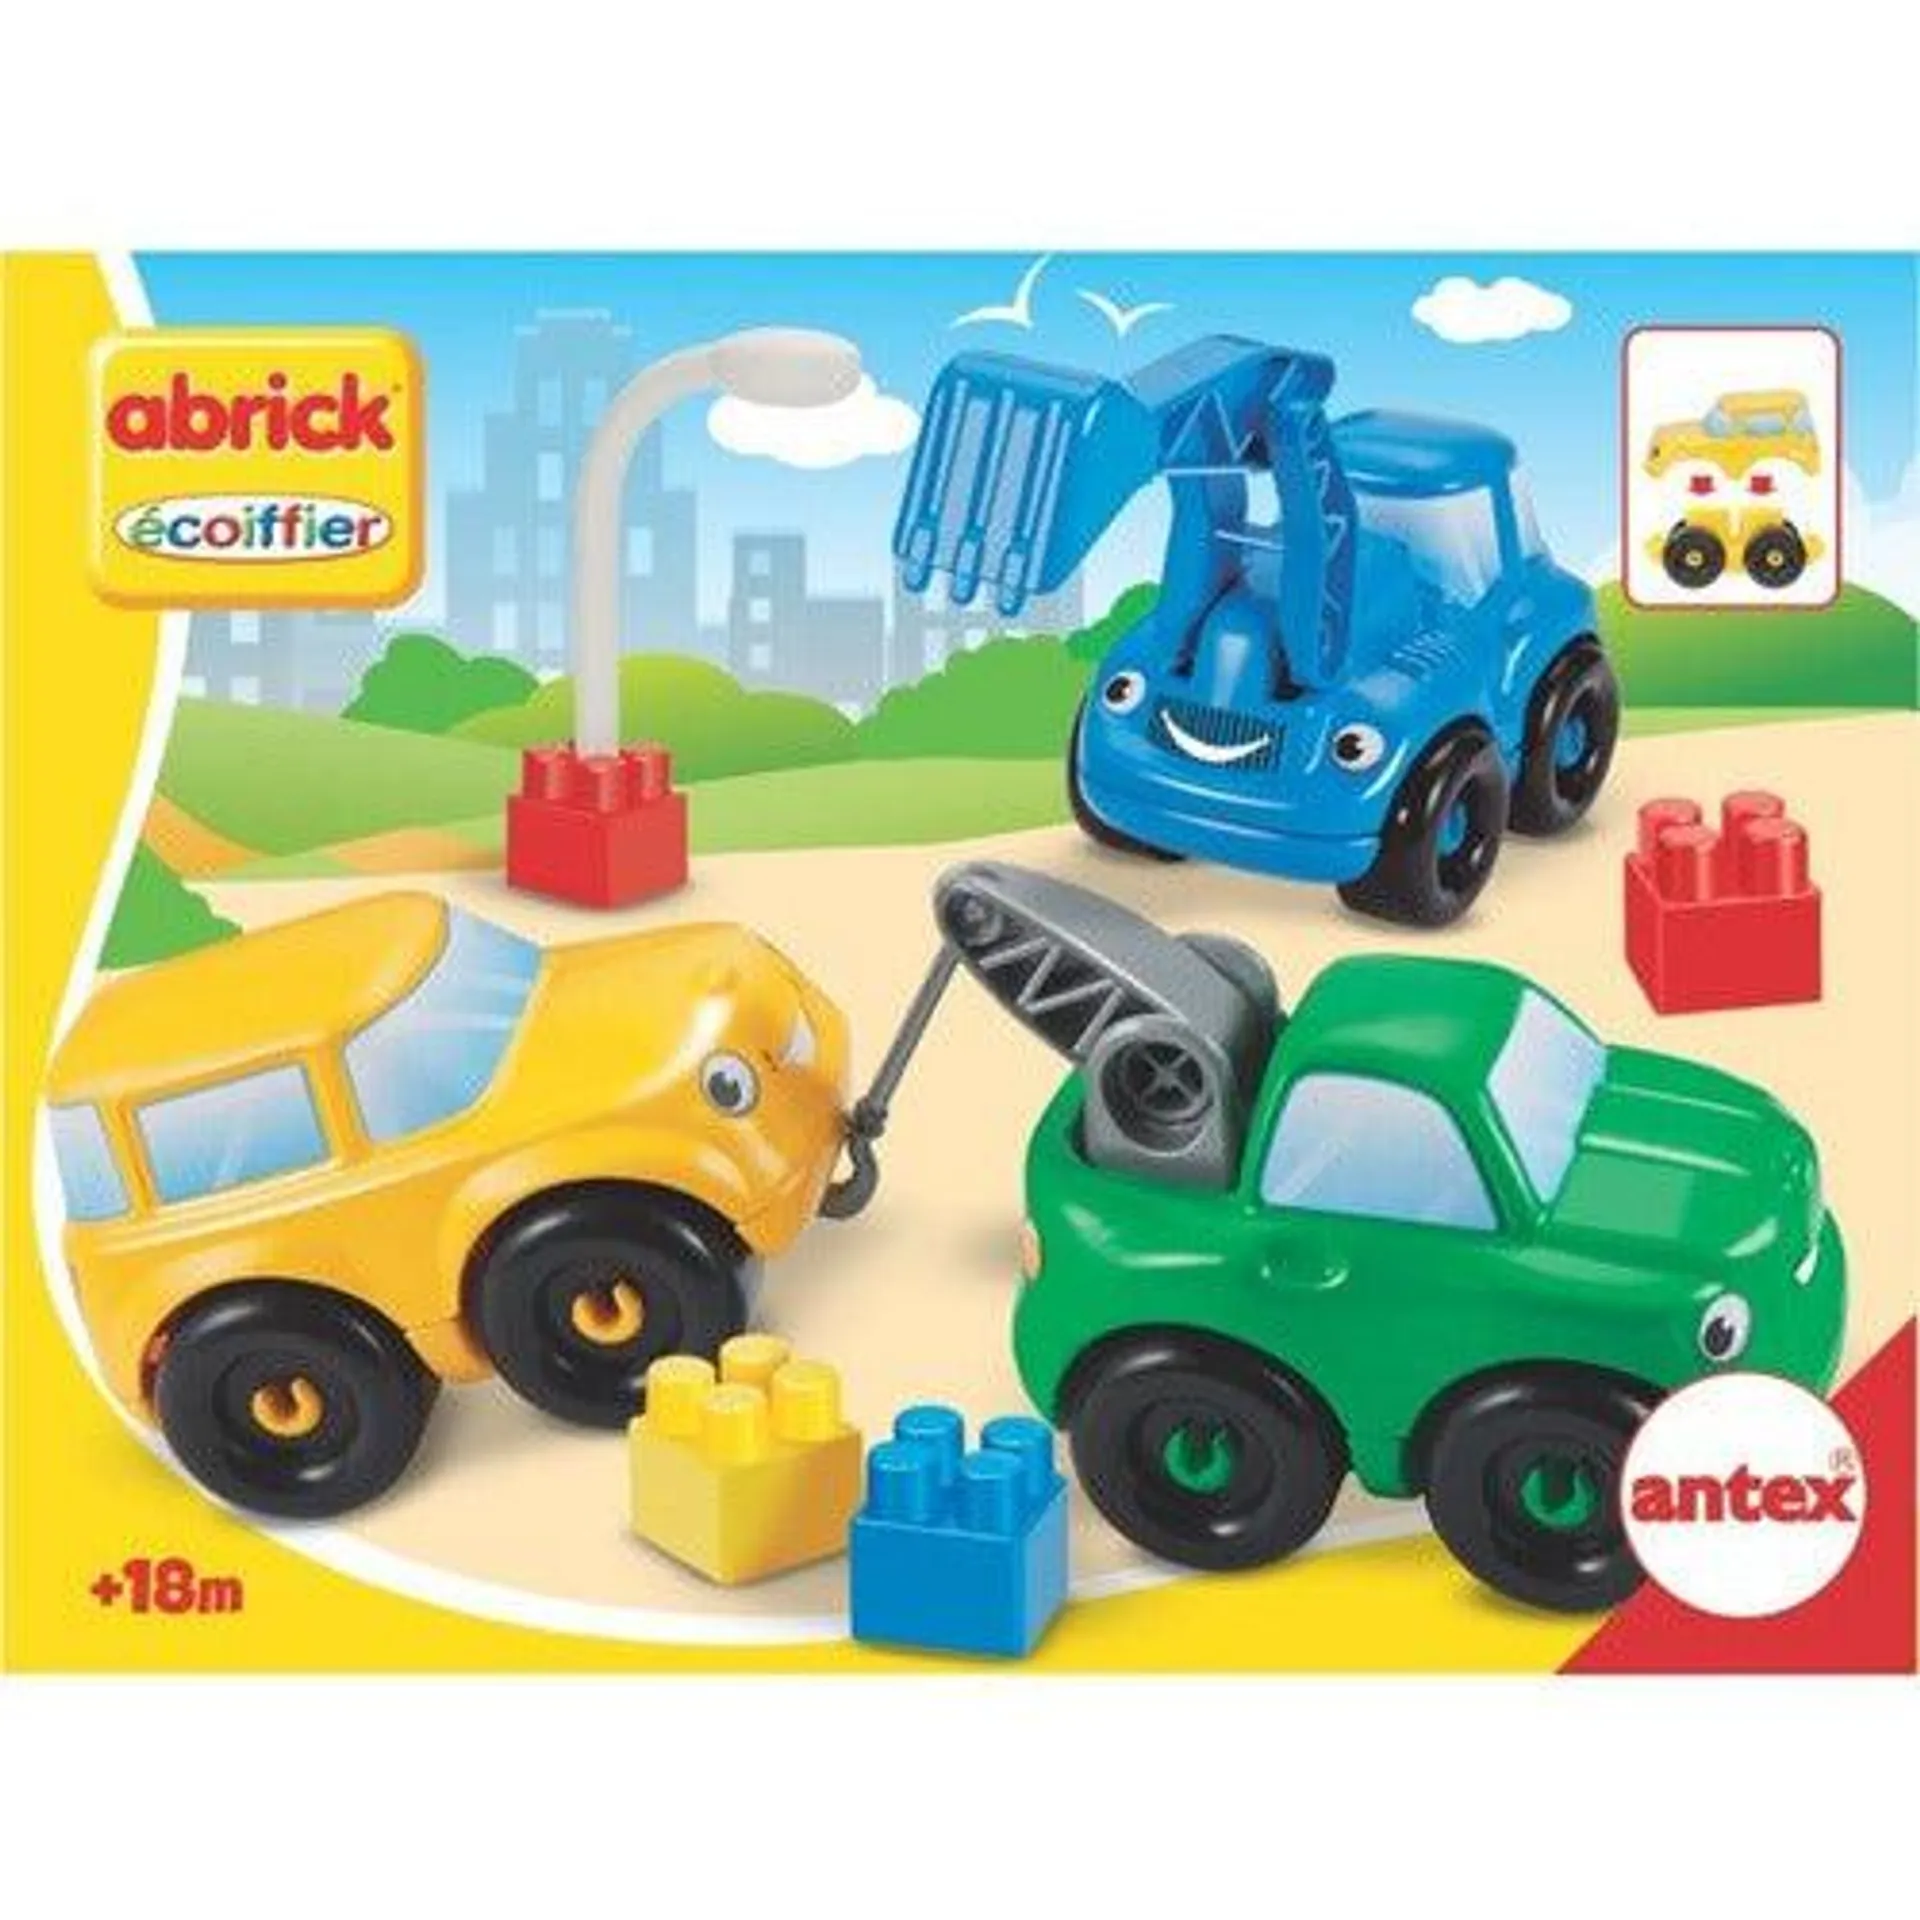 Abrick Set X 3 Vehiculos Construccion Grua Antex 9042